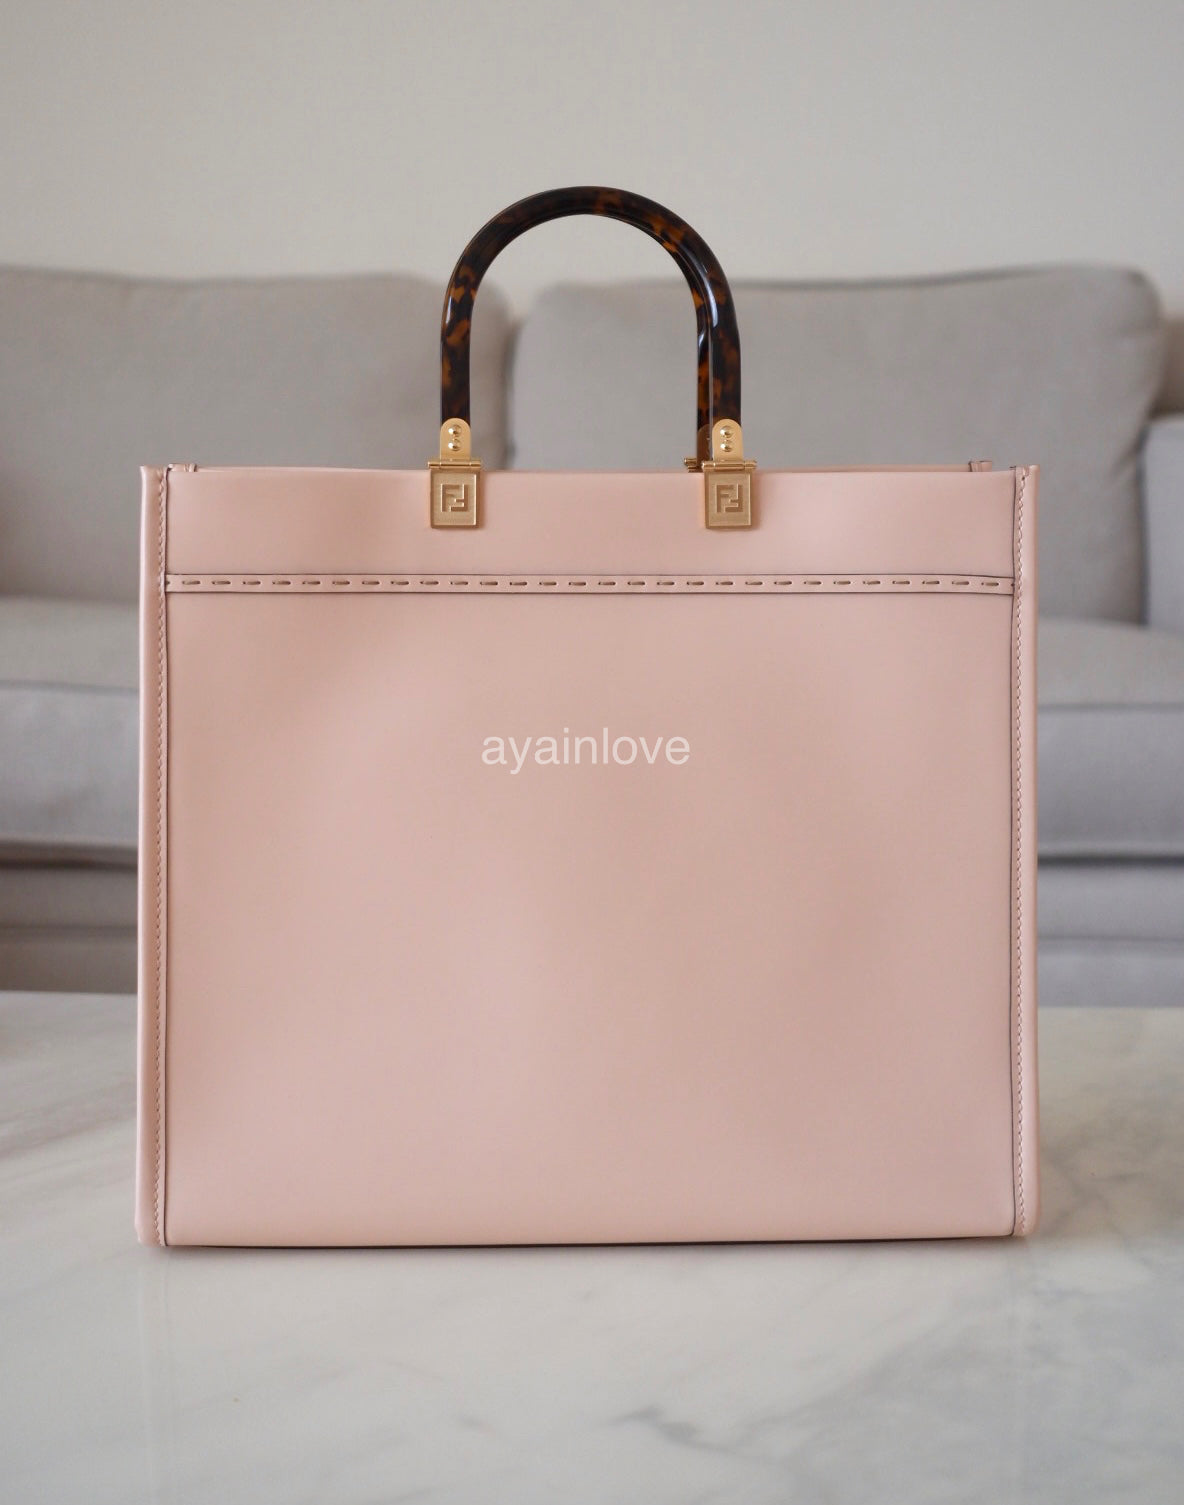 FENDI Sunshine Medium Light Pink Shopper Bag Gold Hardware